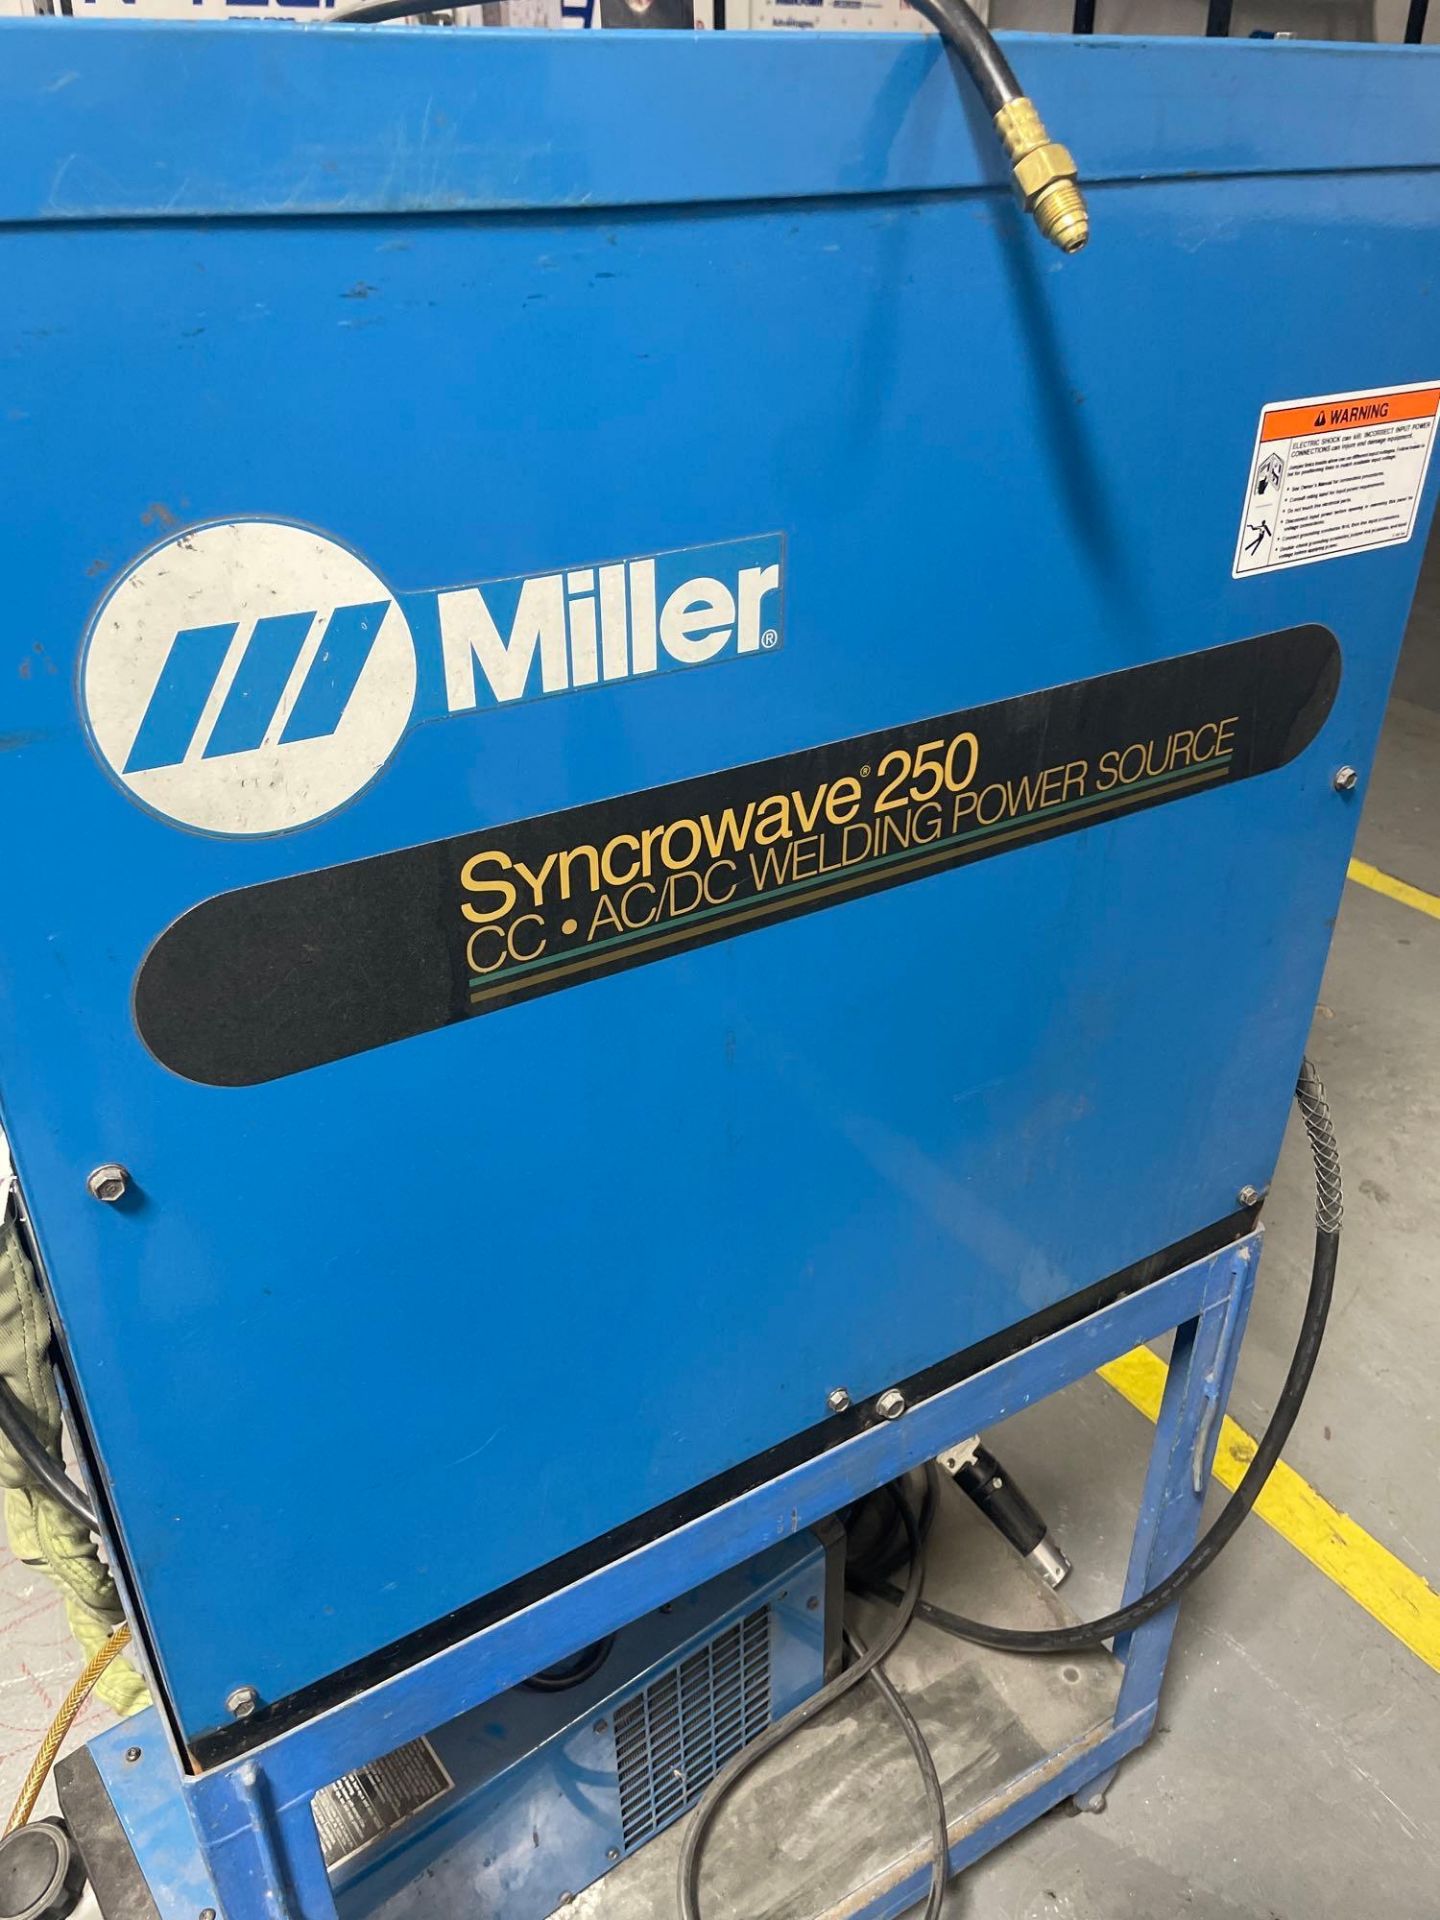 Miller Syncrowave 250 CC Welding Power Source, s/n KJ220845 - Image 6 of 7